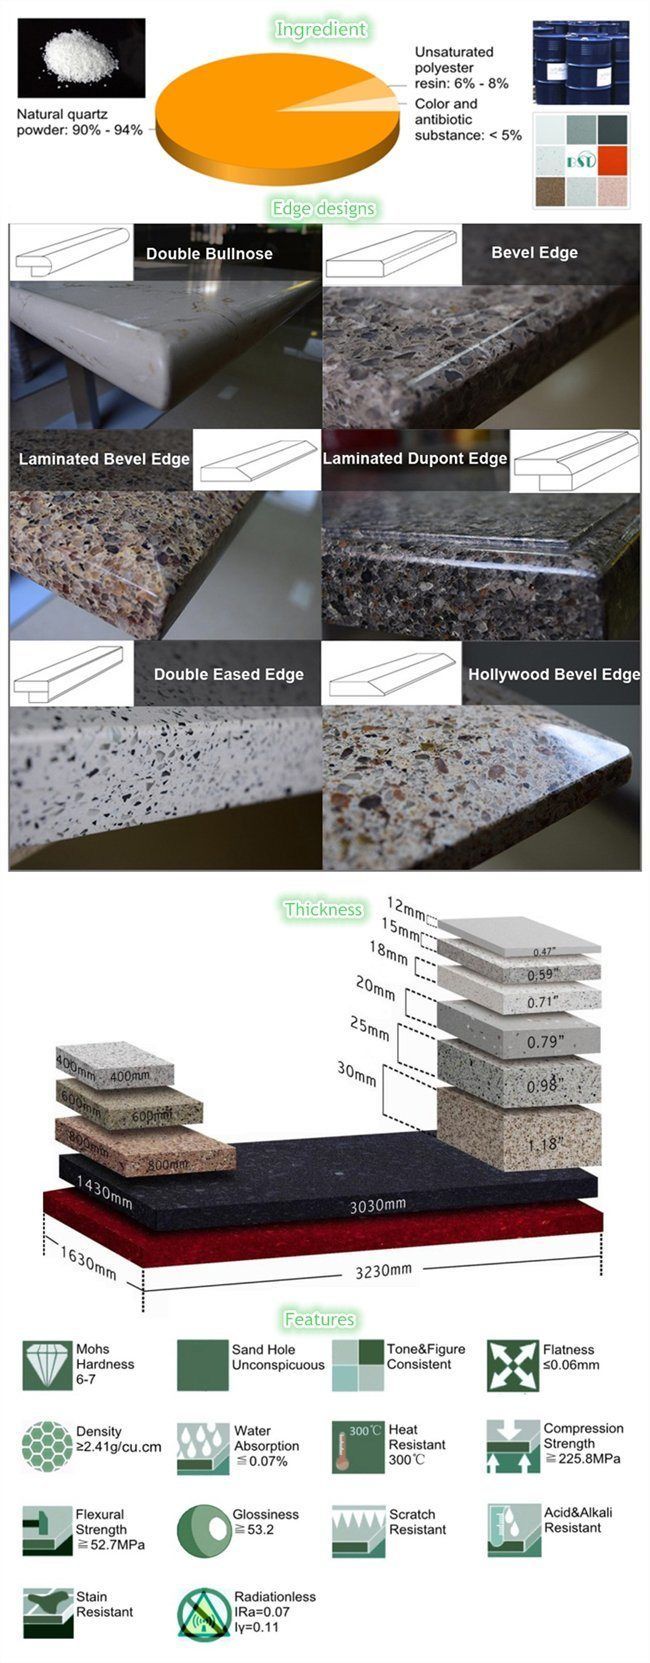 Misty Marble Artificial Quartz Stone Countertop for Kitchcountertop Supplier